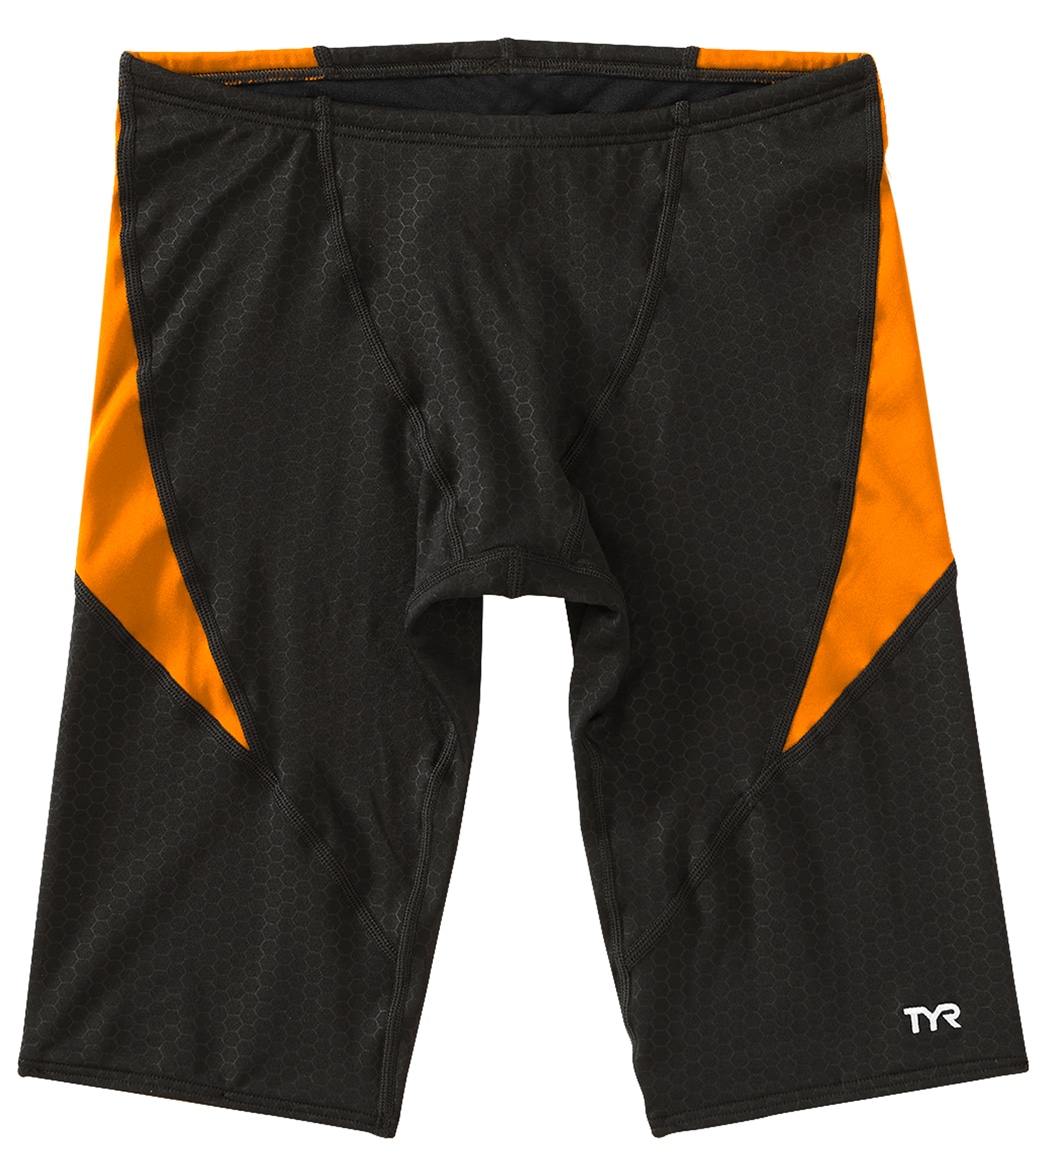 TYR Boys' Hexa Curve Splice Jammer Swimsuit - Black/Orange 24 - Swimoutlet.com